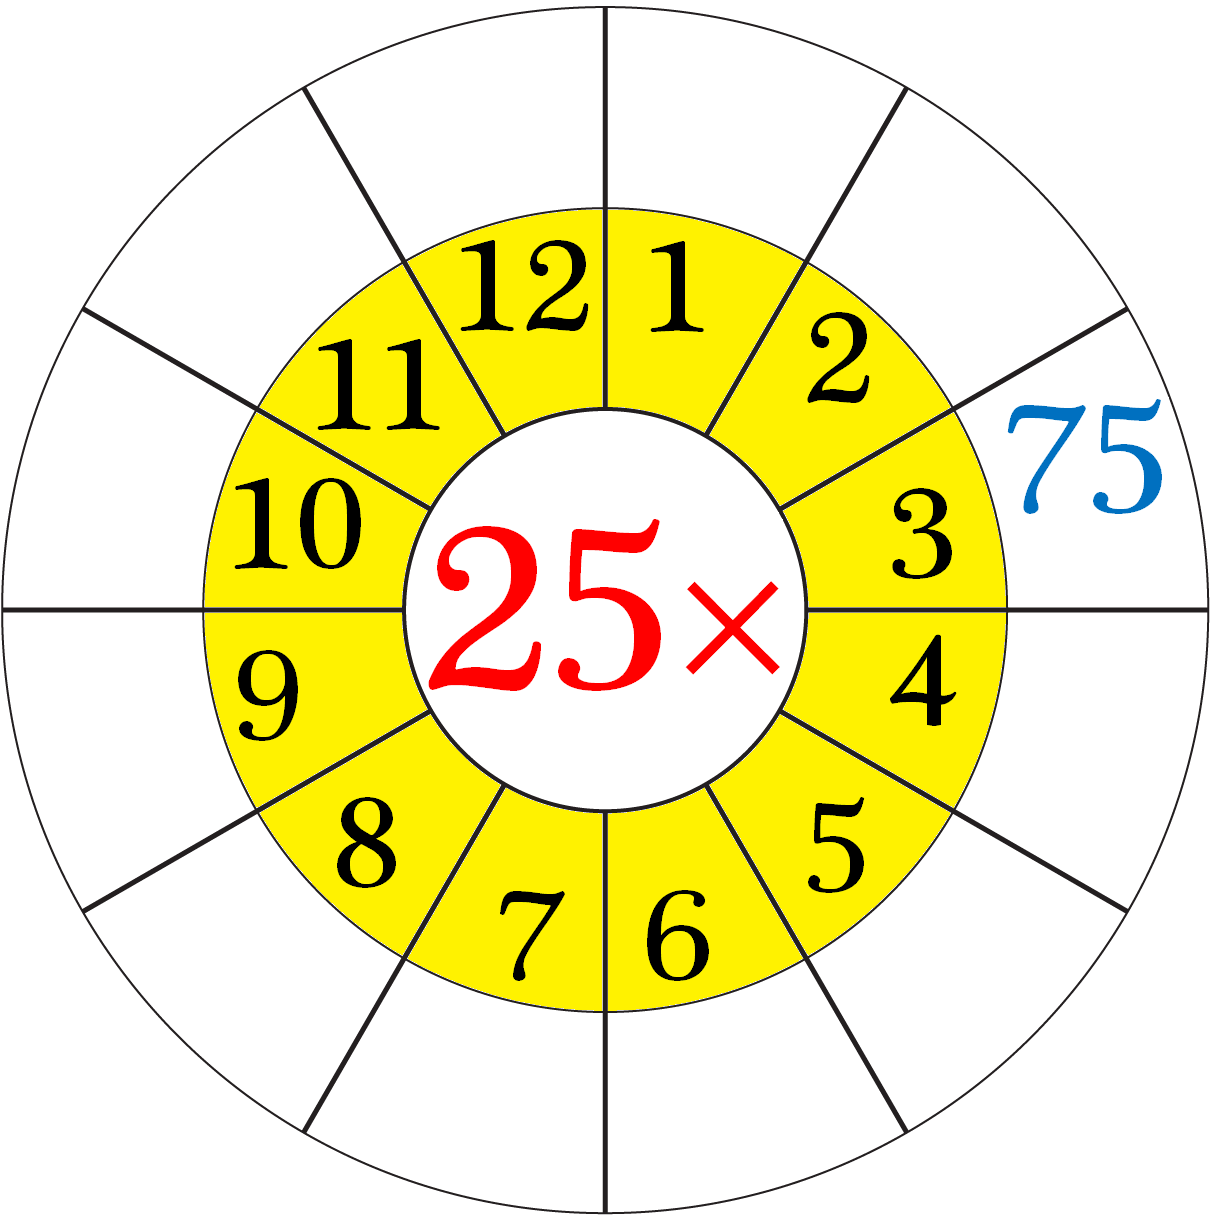 Worksheet on Multiplication Table of 25